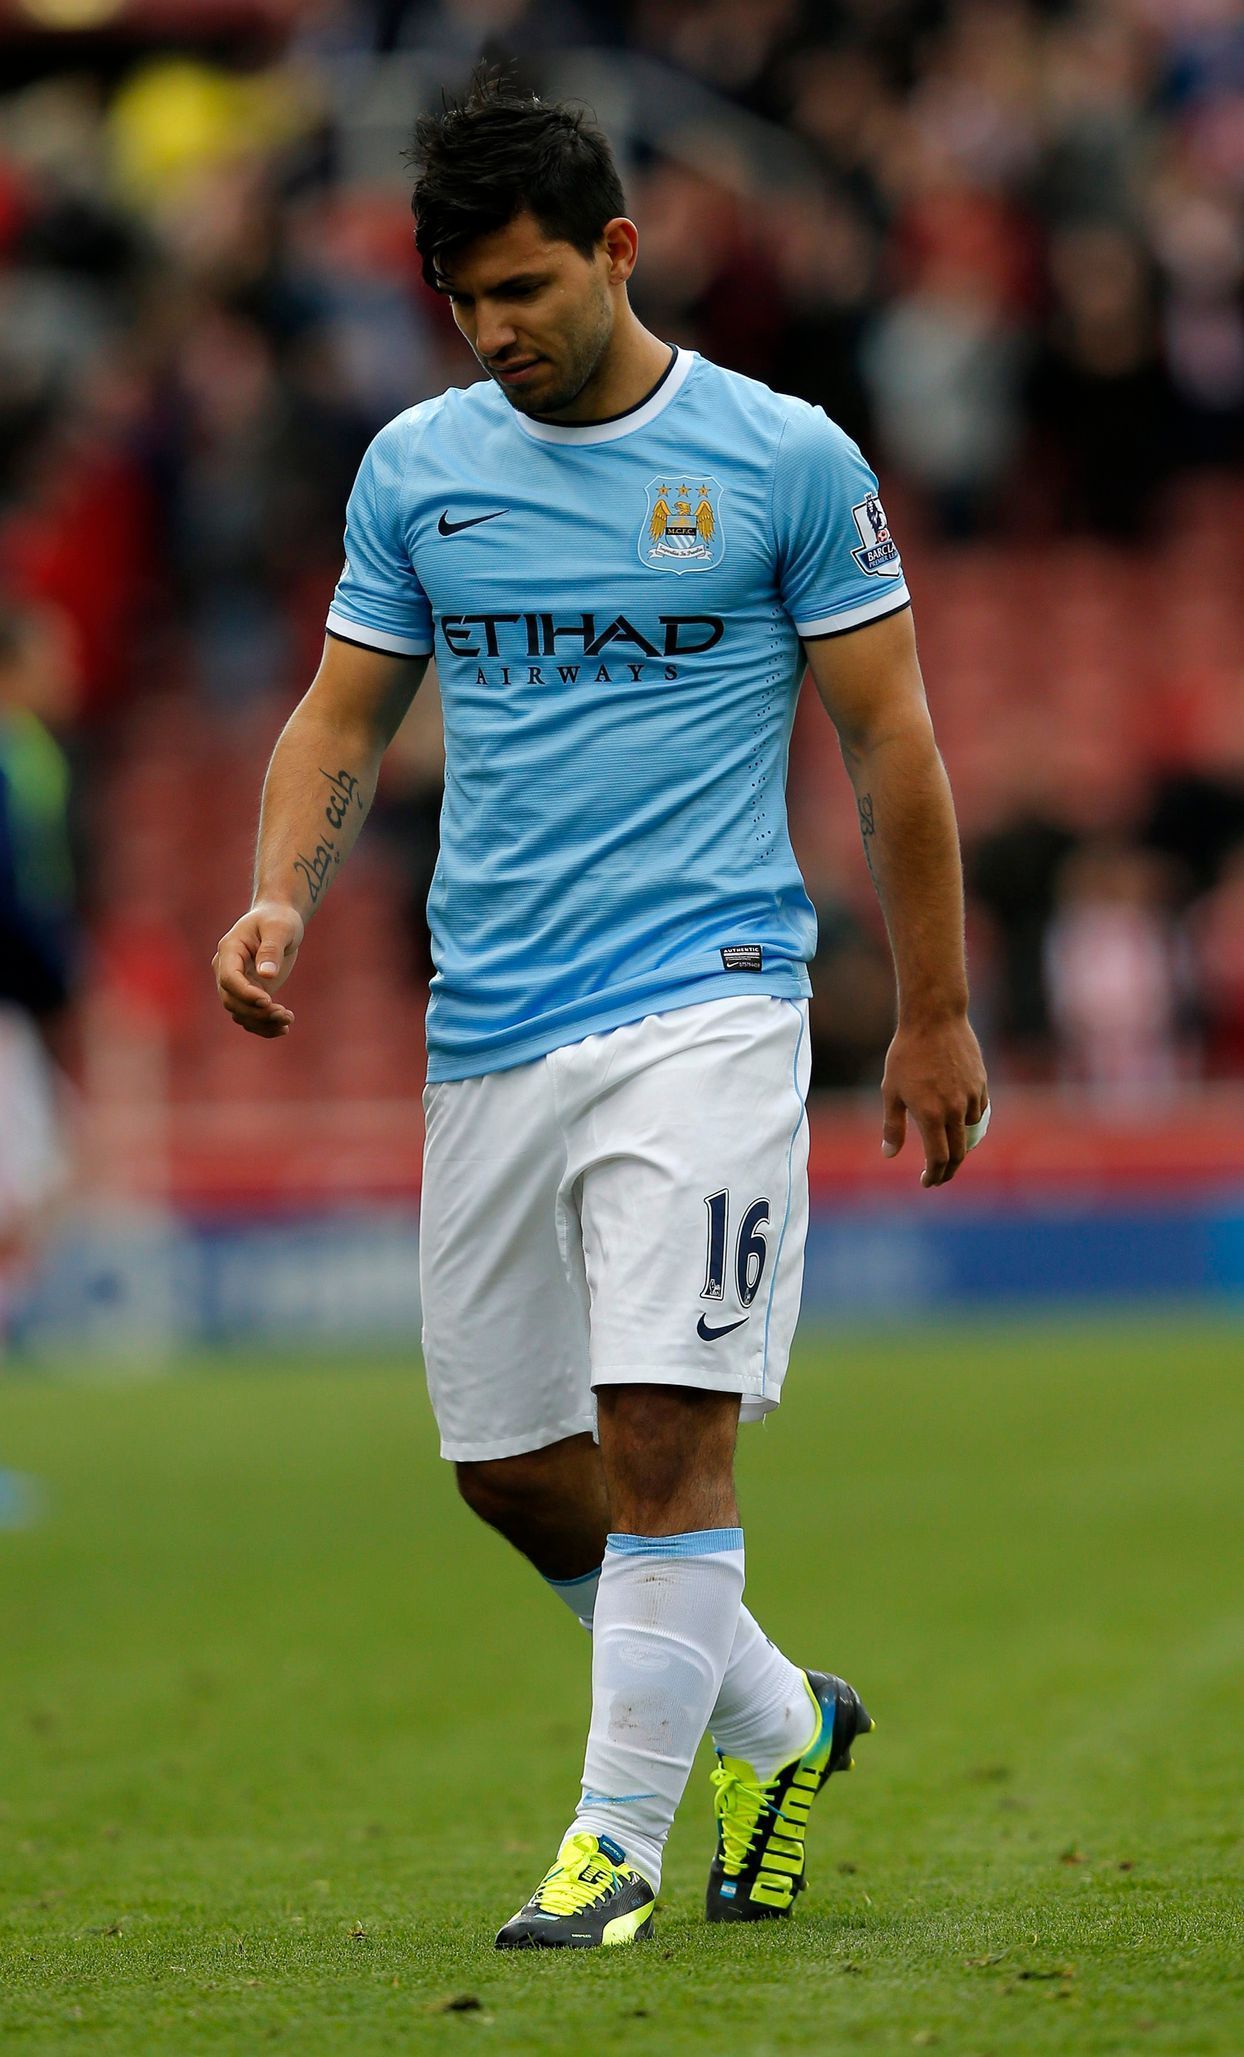 Sergio Agüero v zápase Stoke - Manchester City